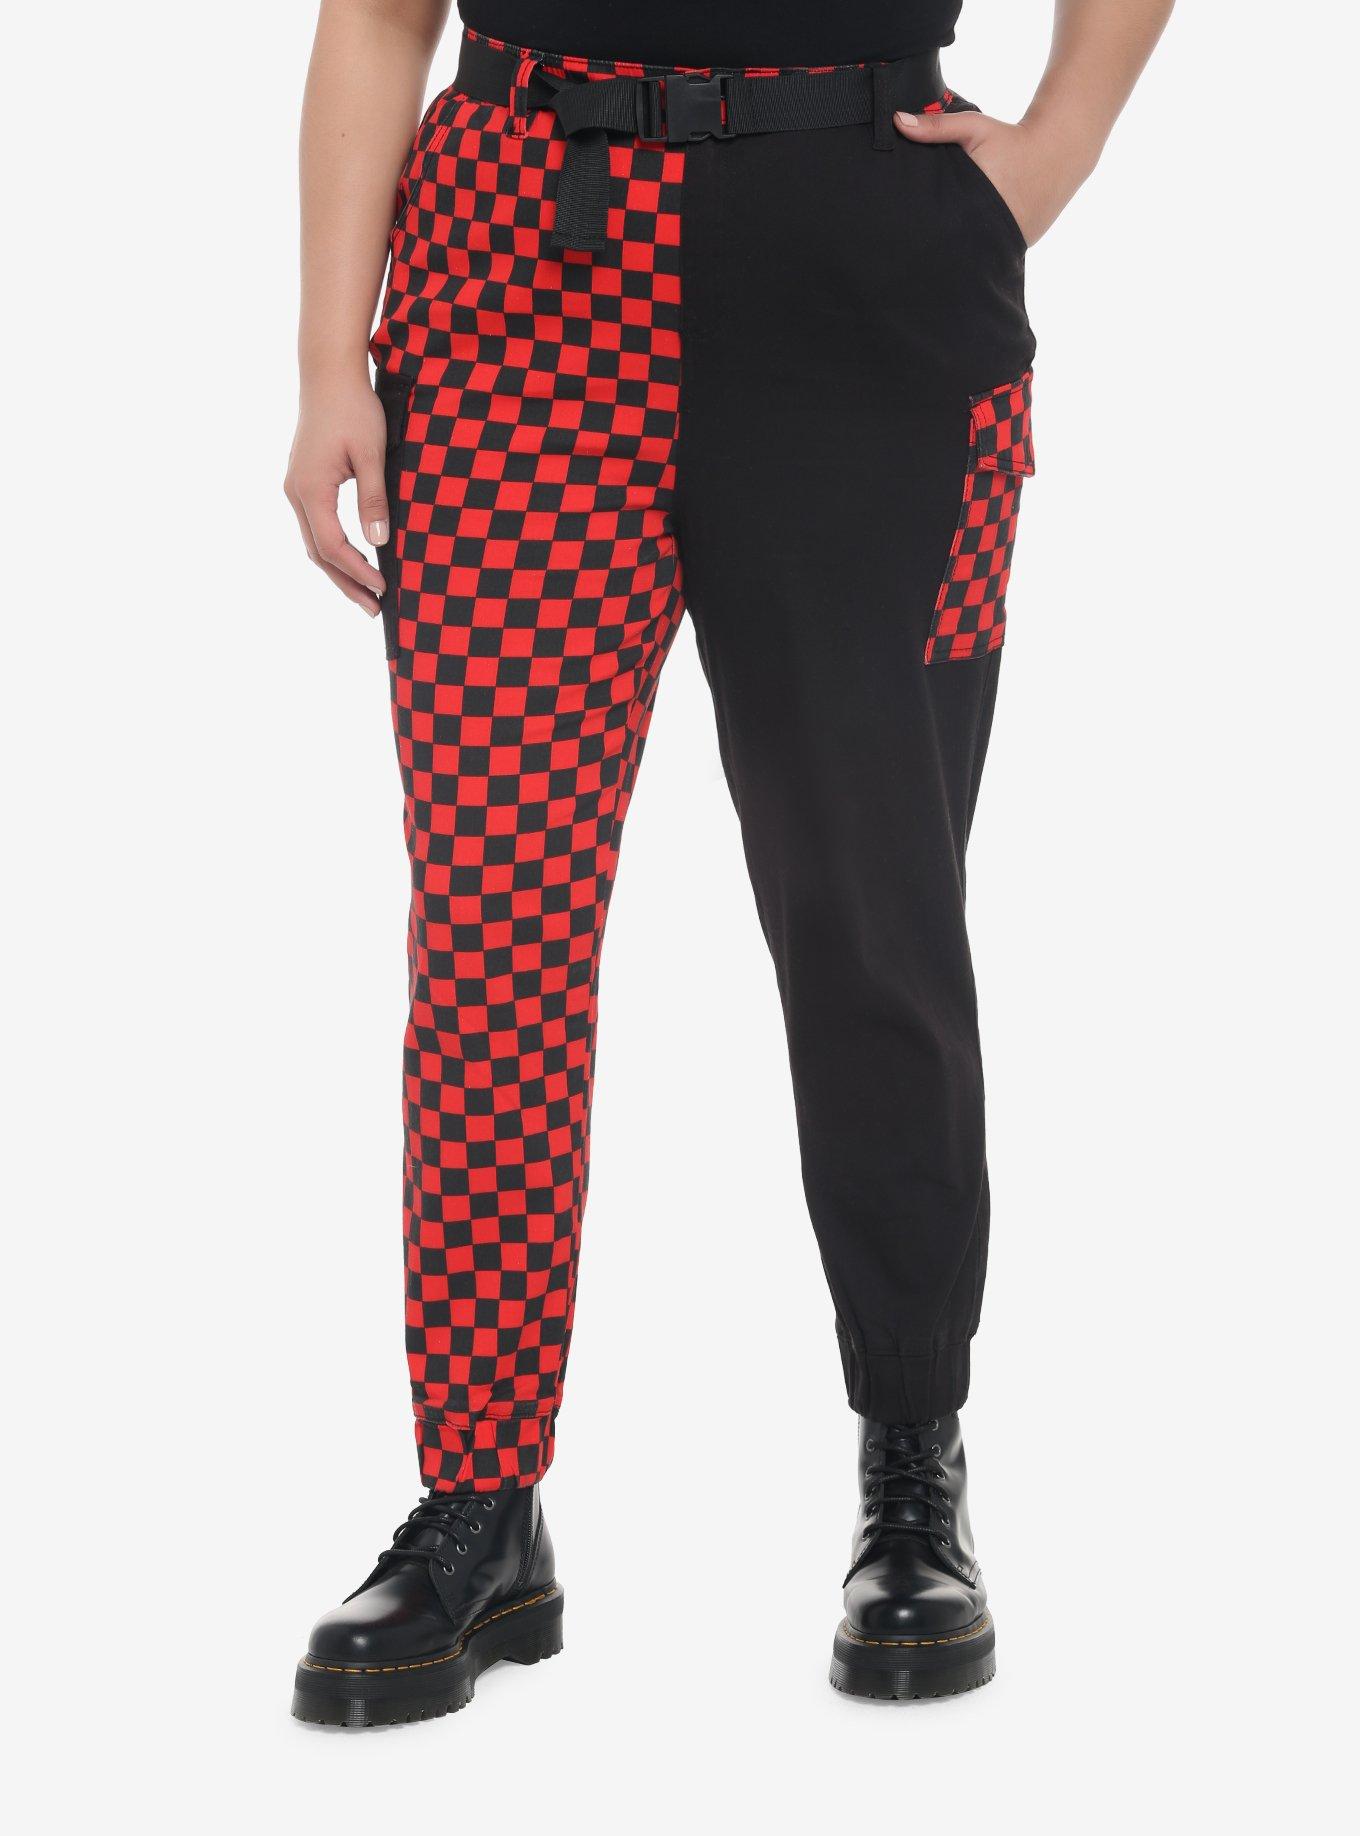 Black & Red Checkered Split Jogger Pants Plus Size